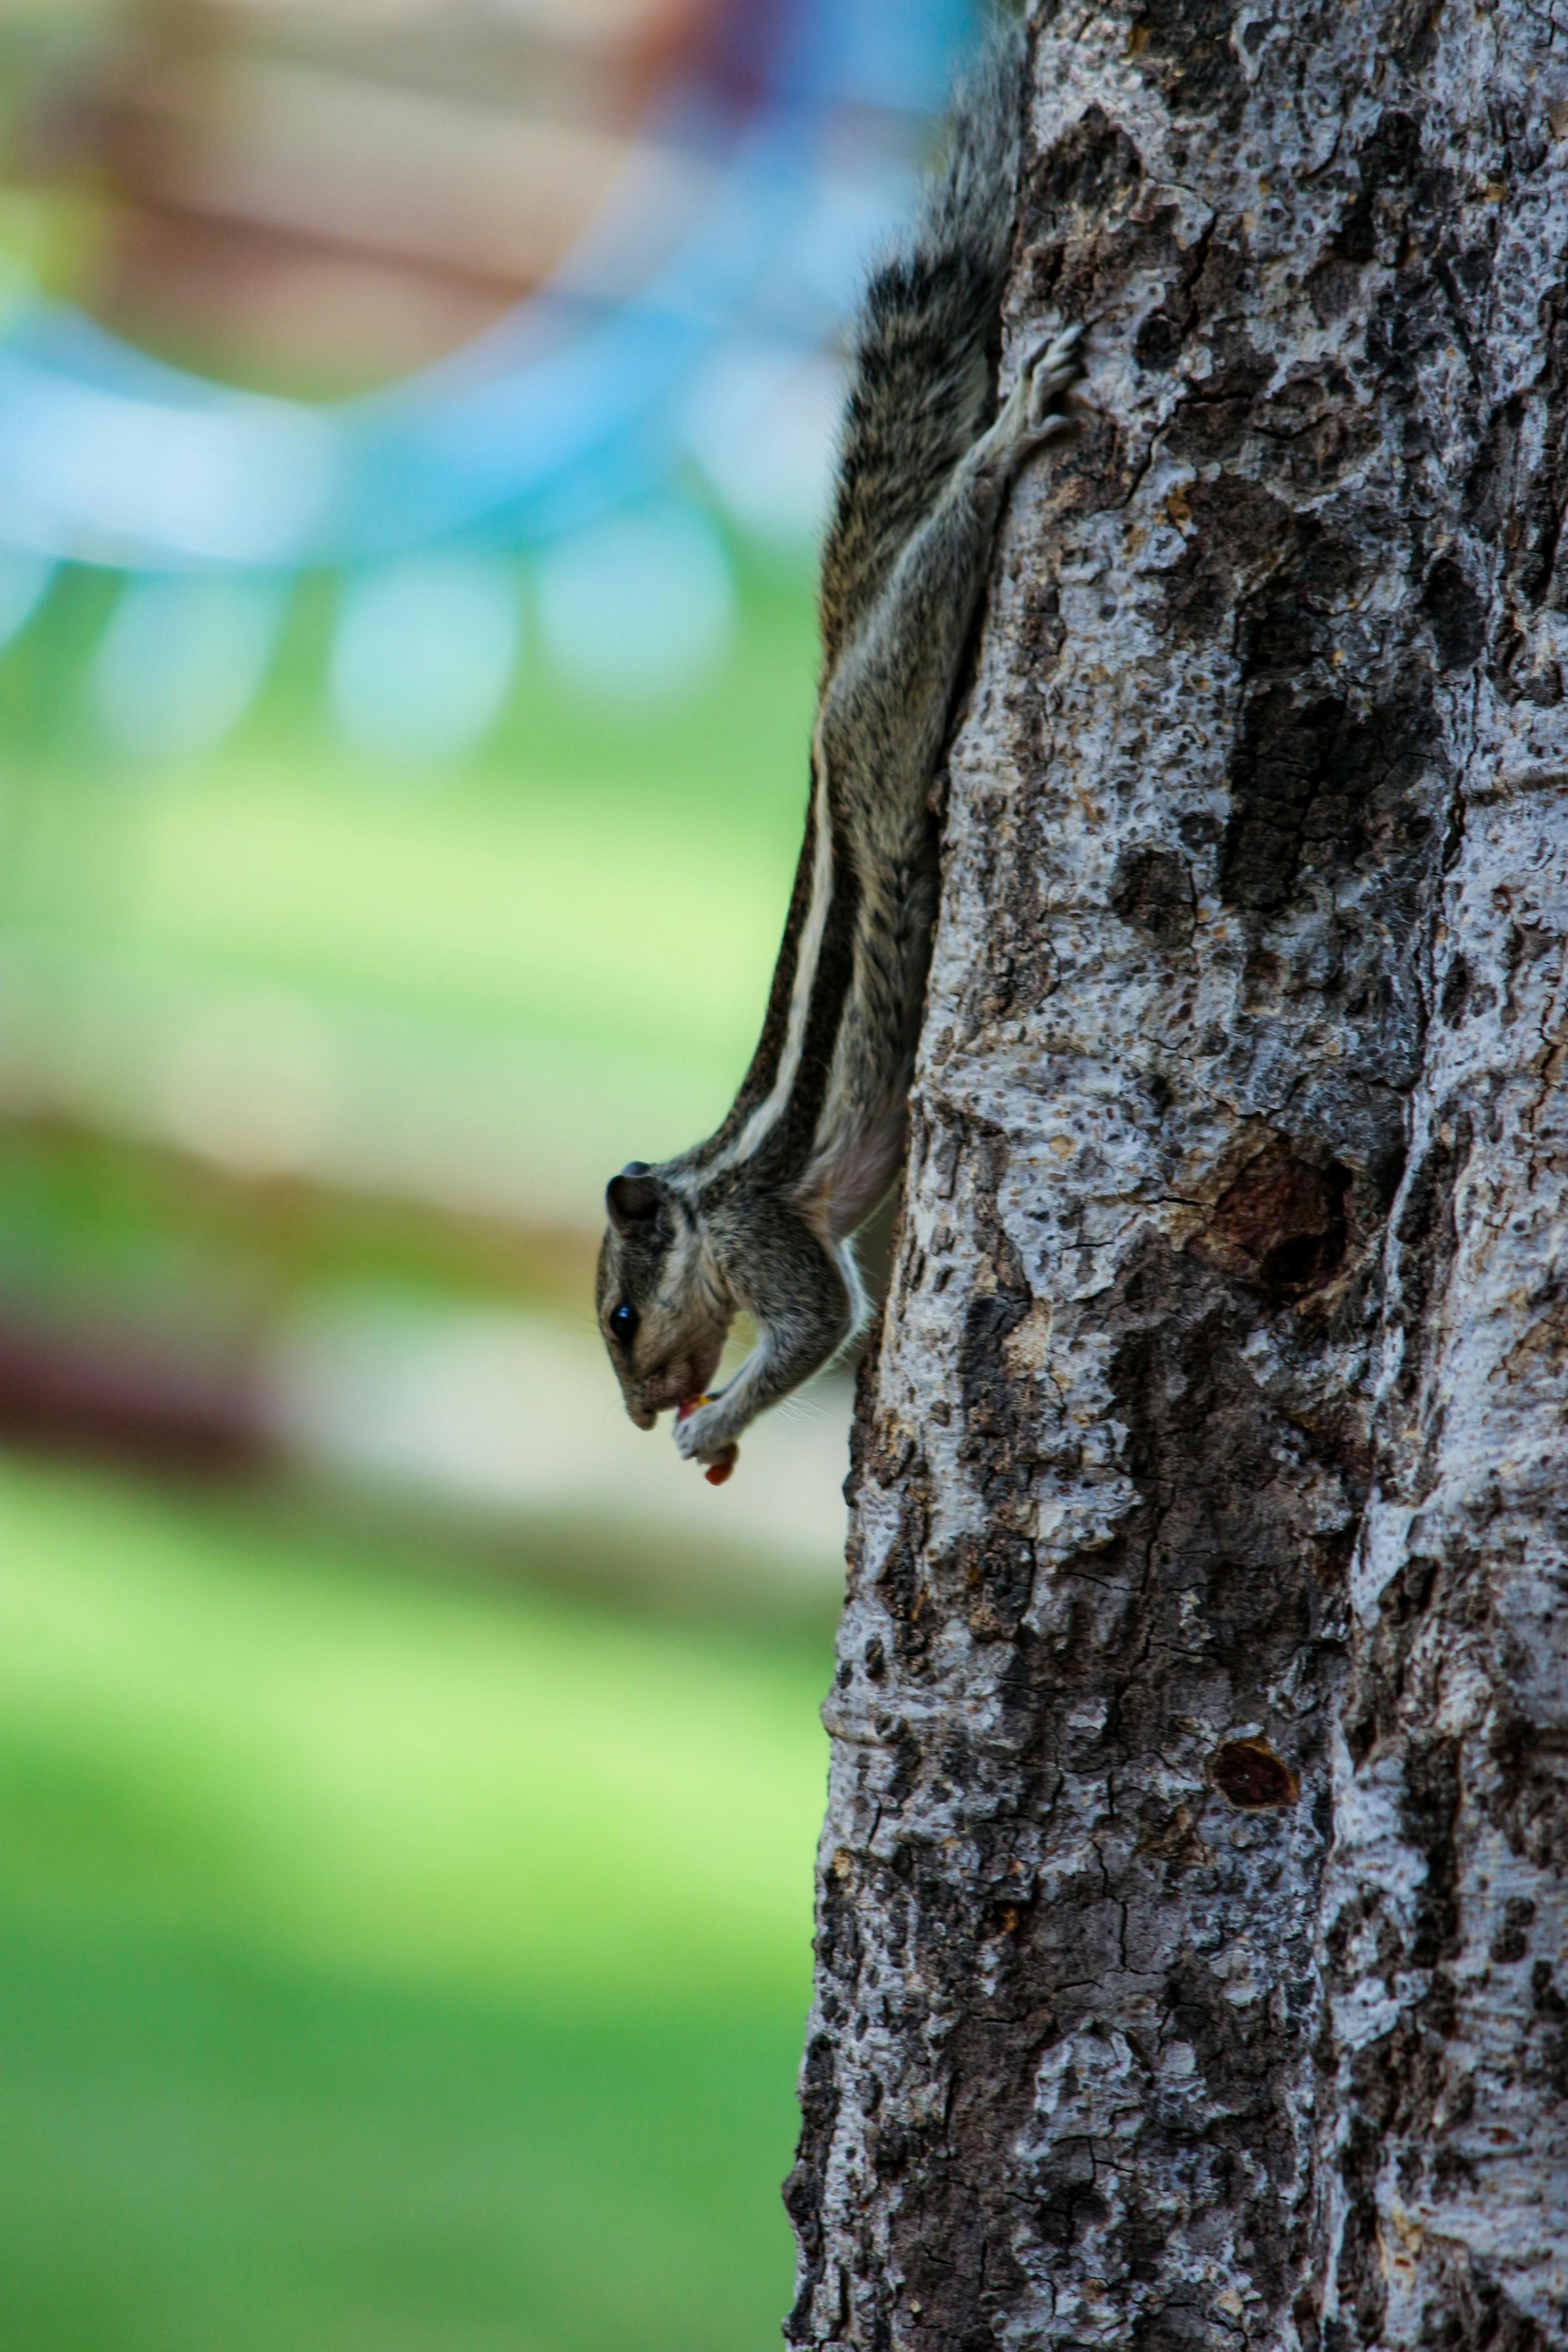 Free stock photo of #animal #blur #depthoffield #squirrel #eating, #animallife #cute #picoftheday #, #chipmunk #lovely